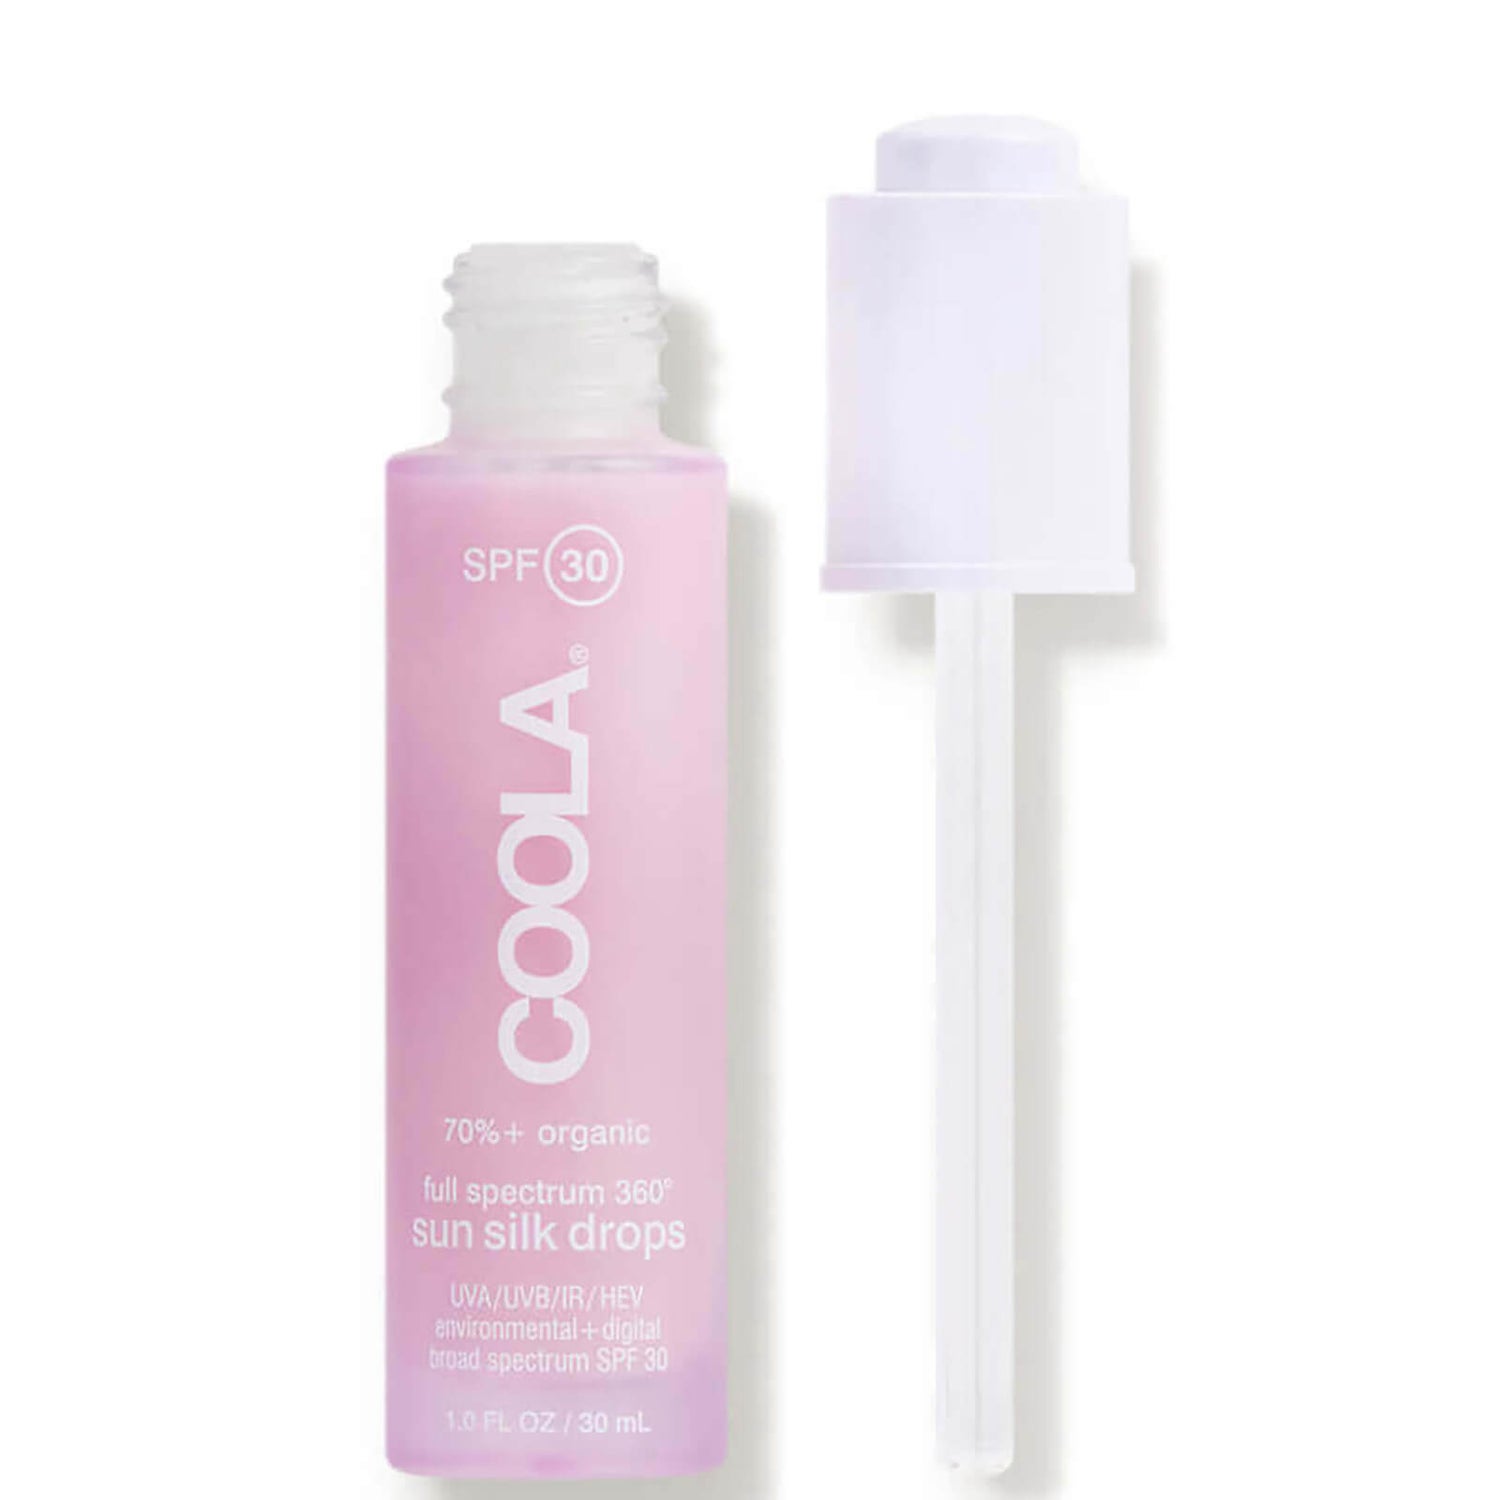 COOLA Full Spectrum 360° Sun Silk Drops Organic Face Sunscreen SPF 30 (1 oz.)